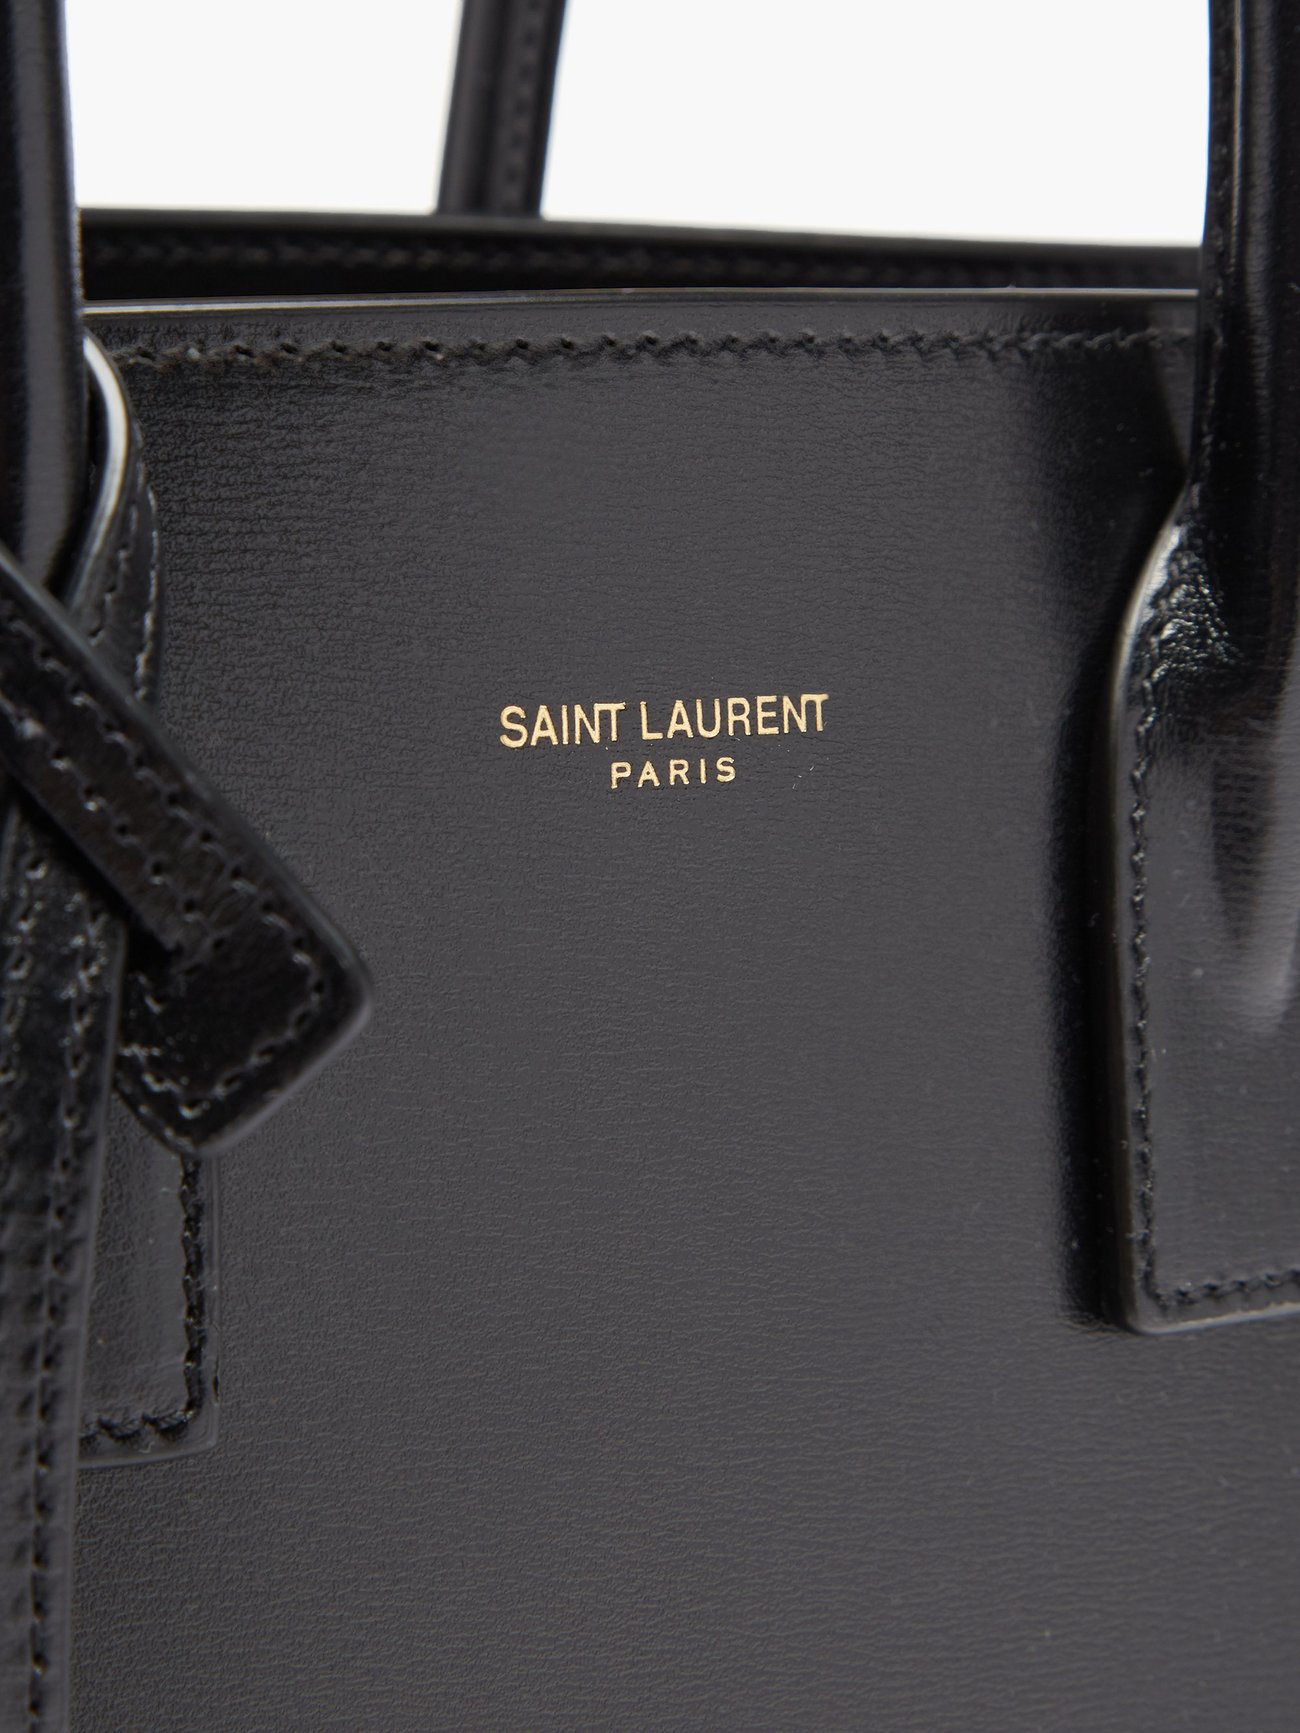 Yves Saint Laurent Classic Sac De Jour Baby in Grained Leather Black - THE  PURSE AFFAIR